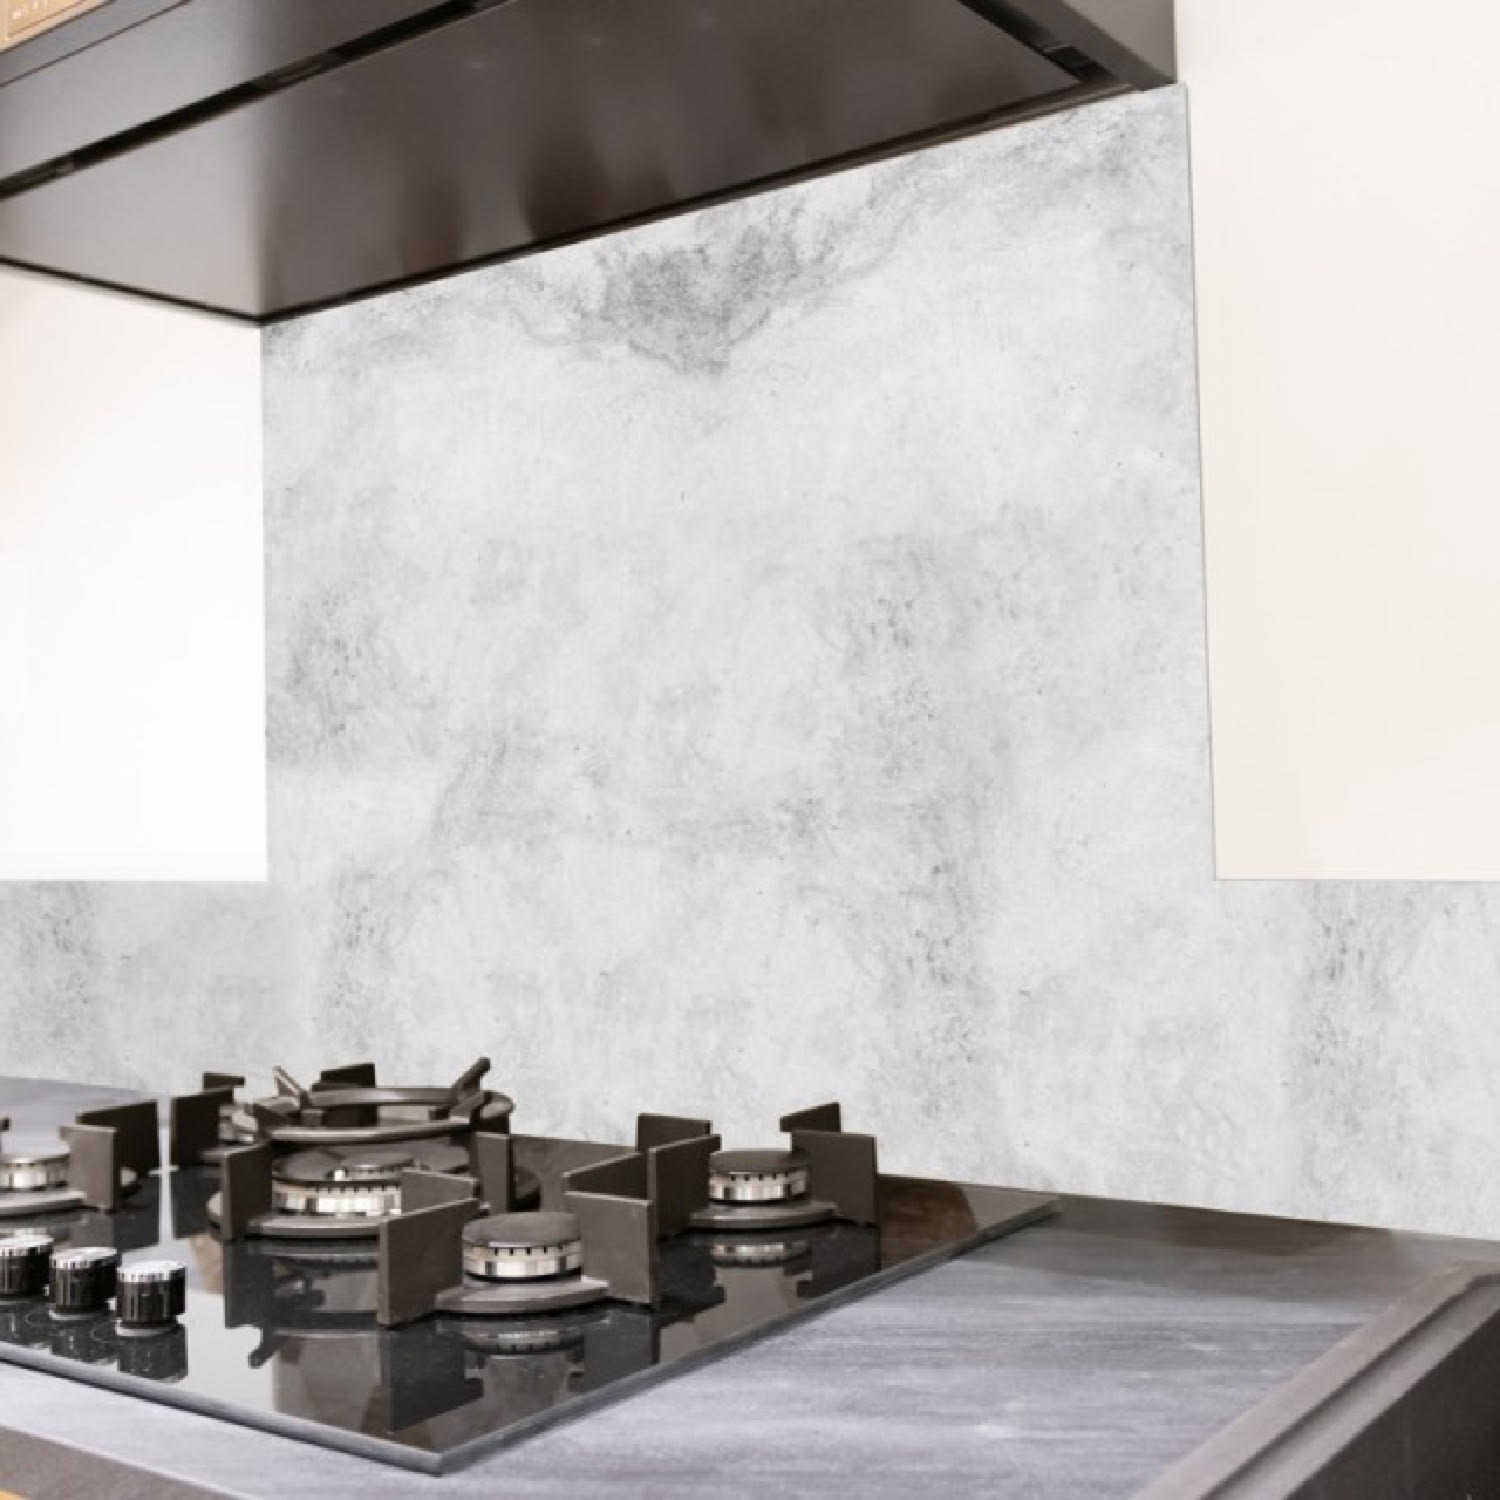 Panel de pared - salpicadero de cocina l60cm×a70cm MARBRE GALLONE